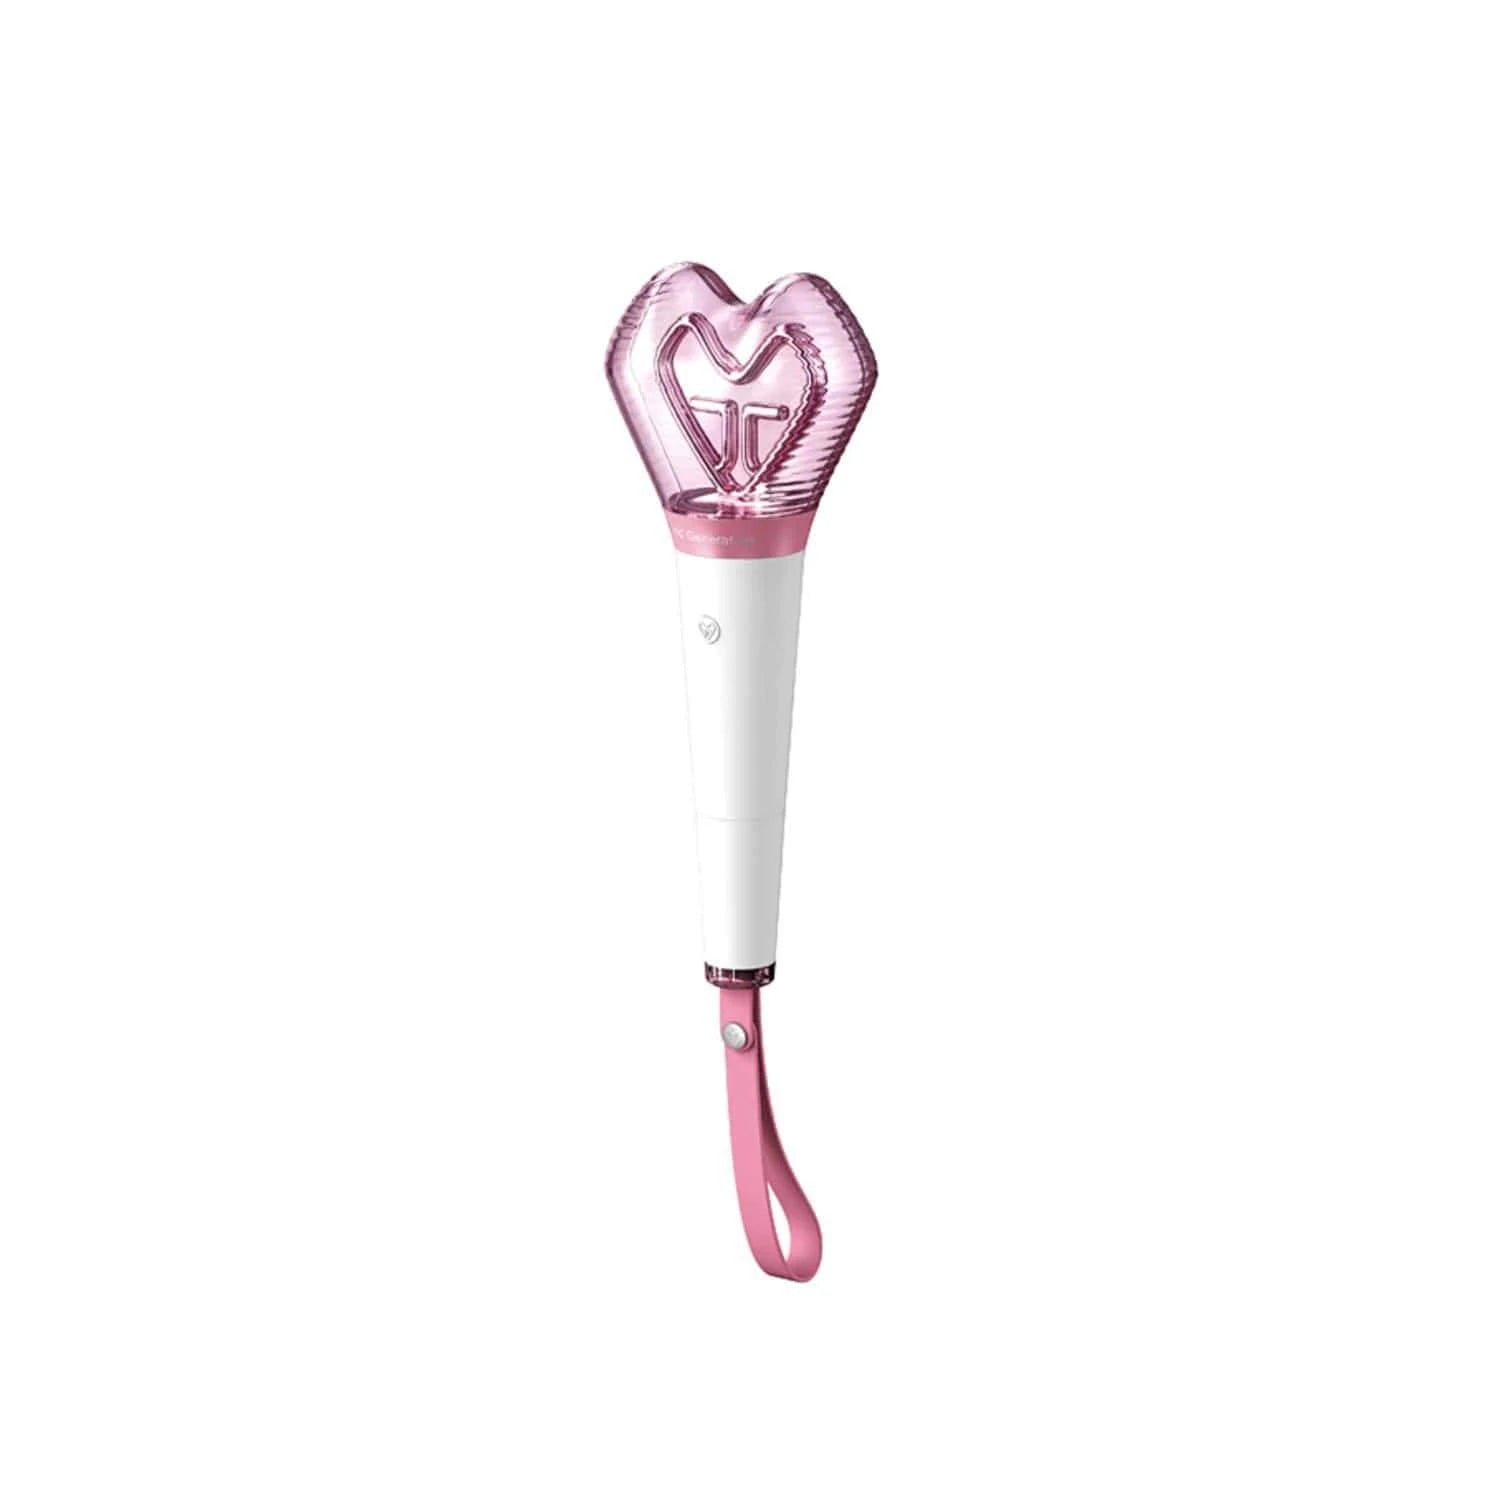 Girls' Generation OFFICIAL Light Stick – Bora K-Pop